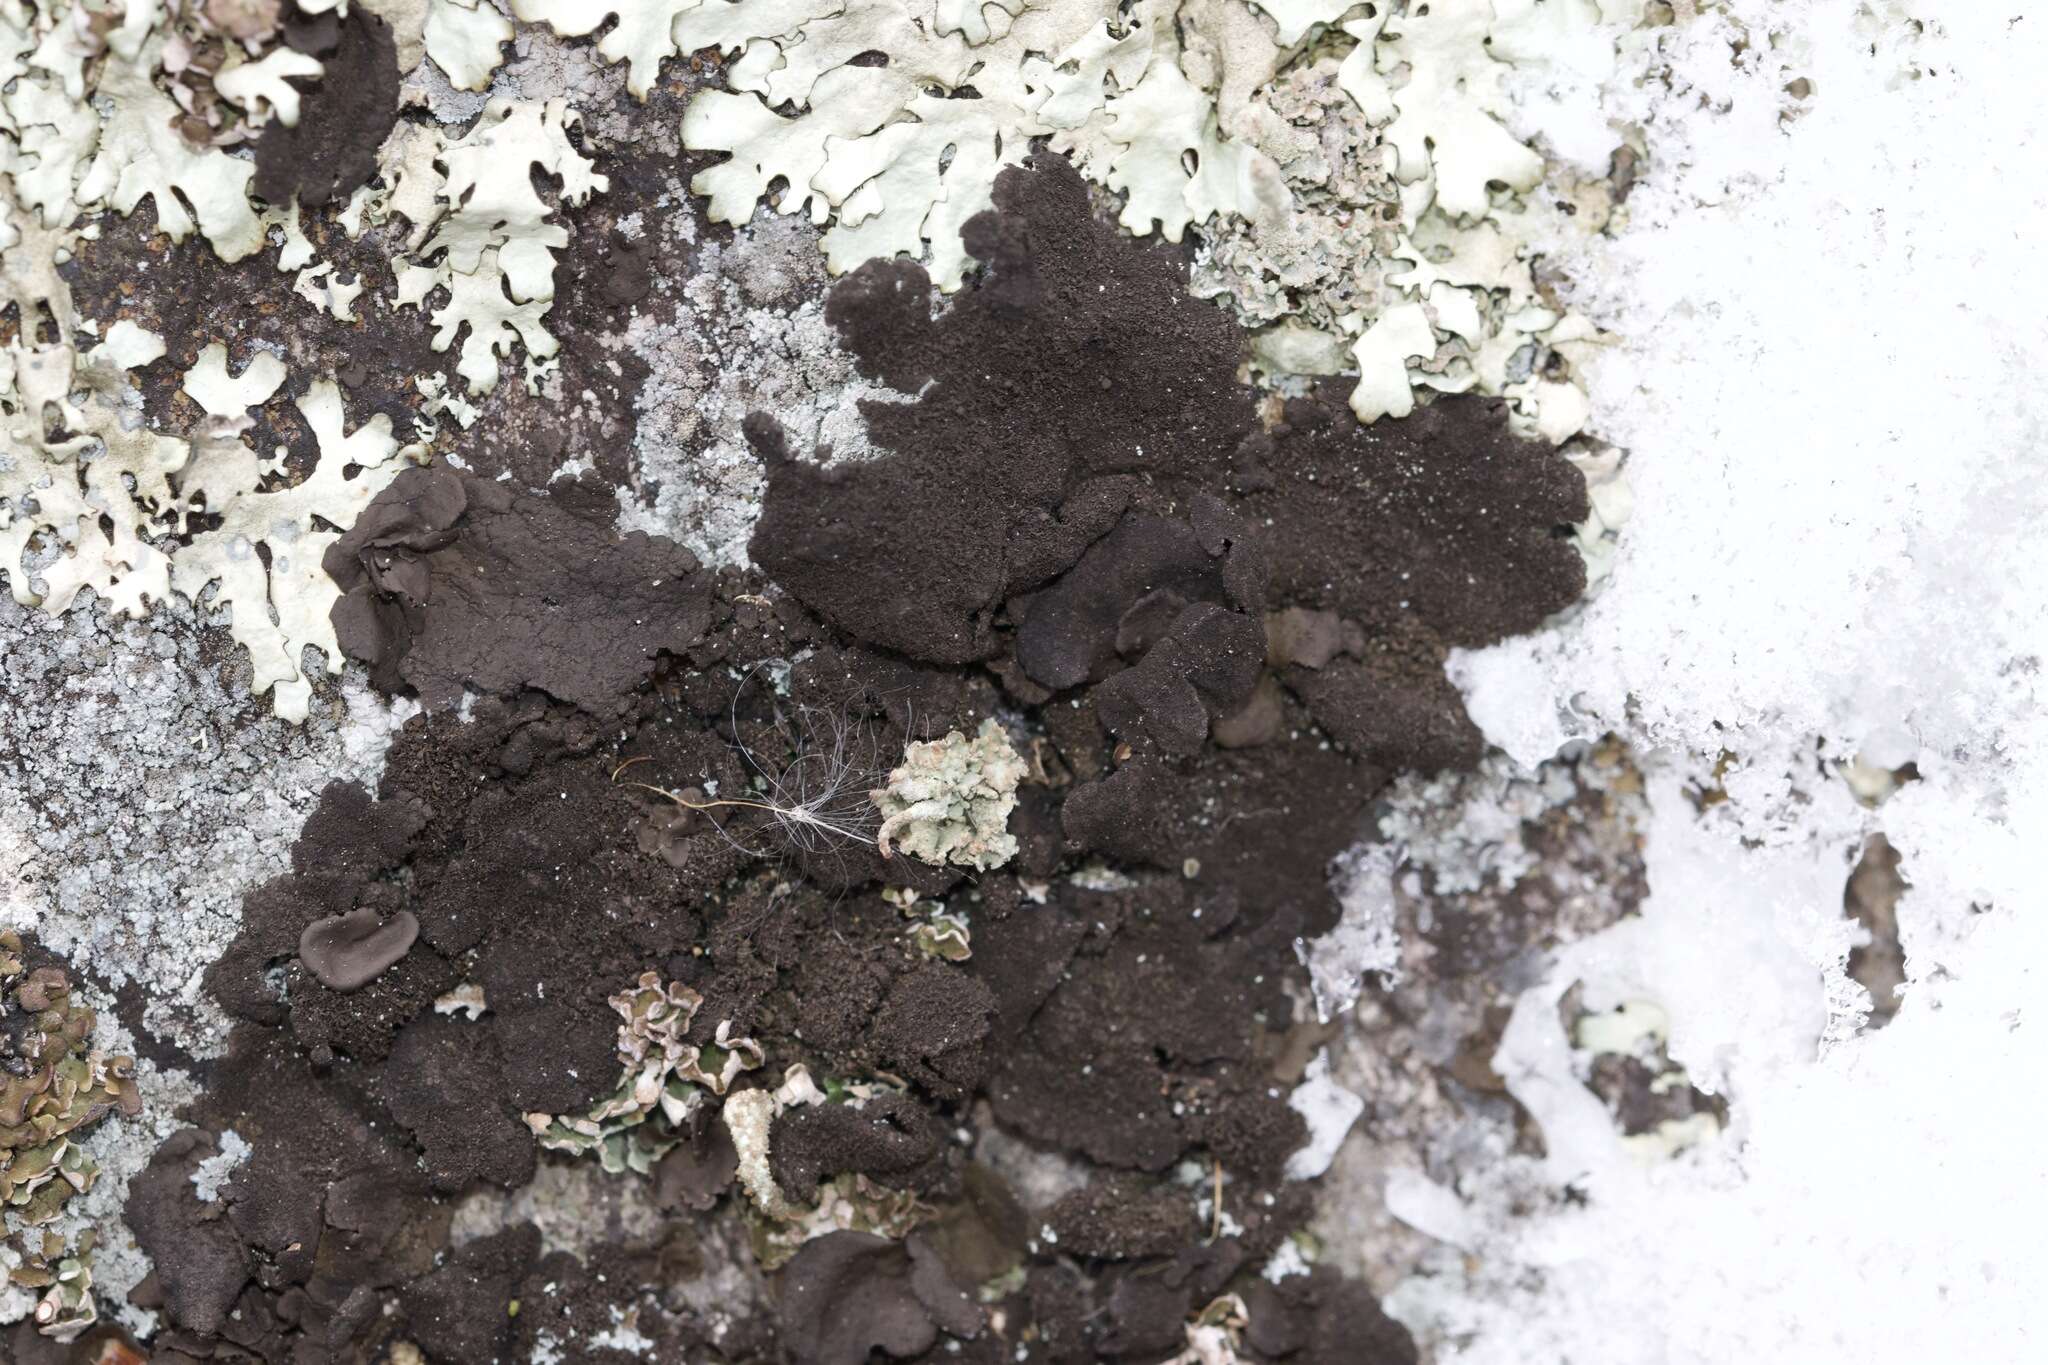 Image of Peppered rock tripe lichen